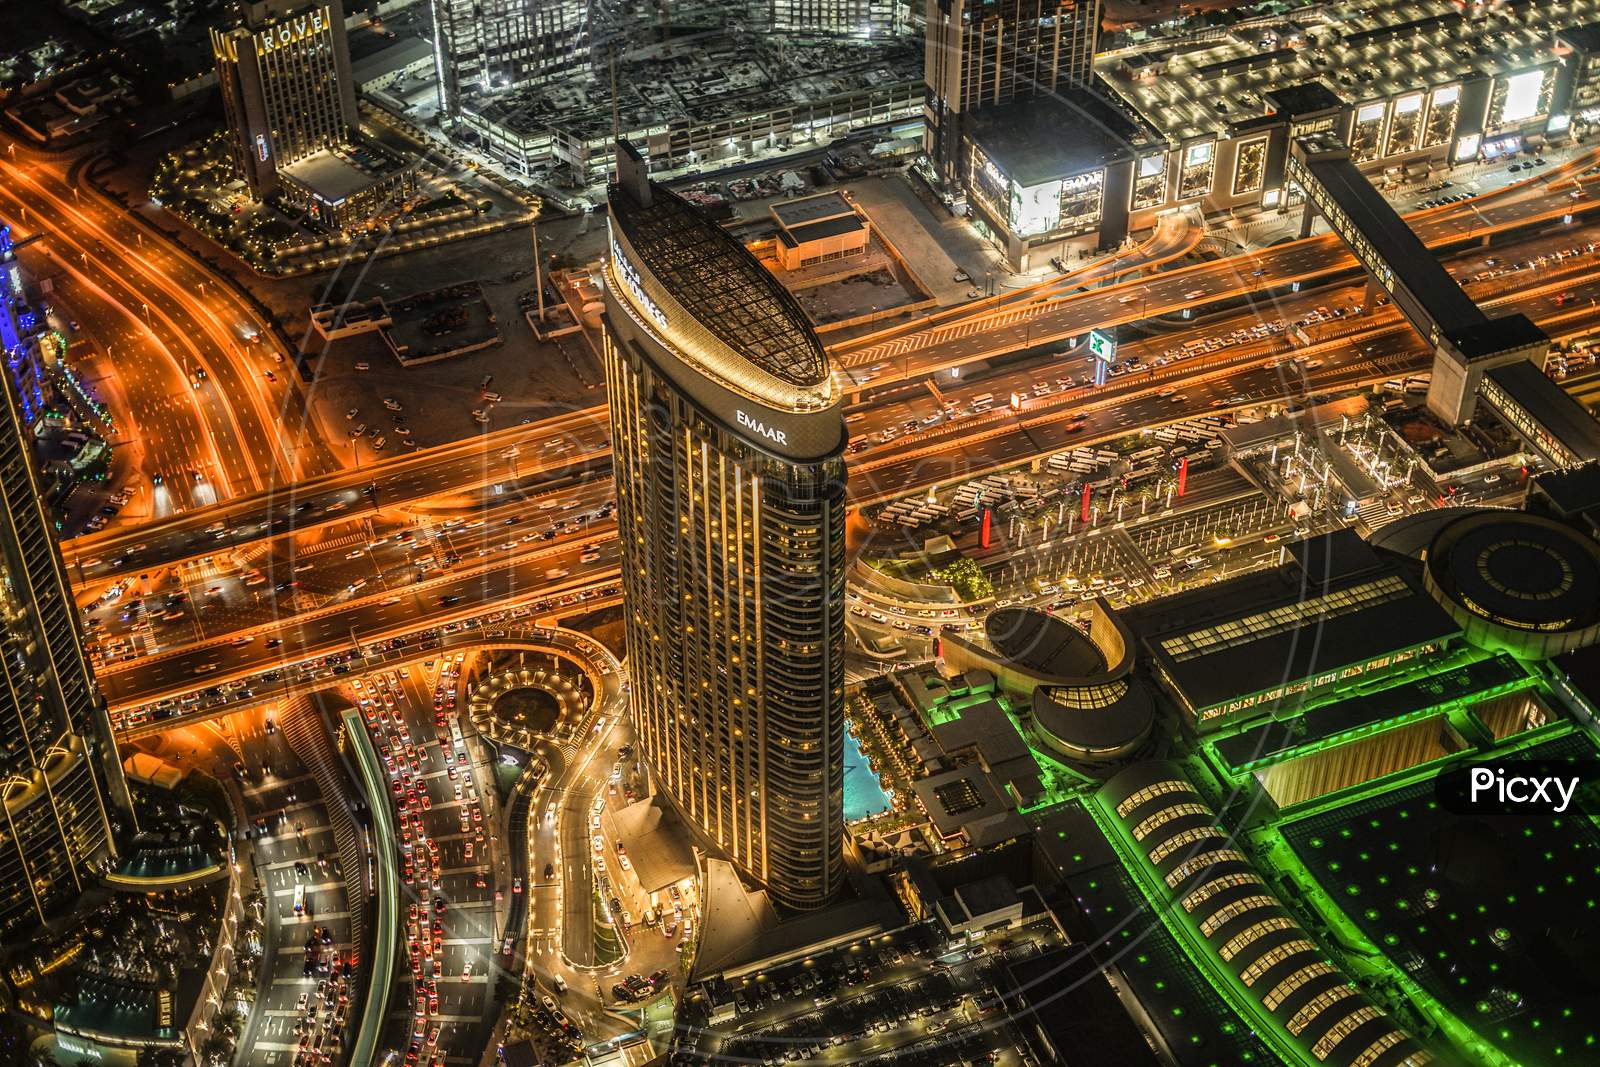 Dubai Night View Seen From The Observation Deck Of Burj Khalifa